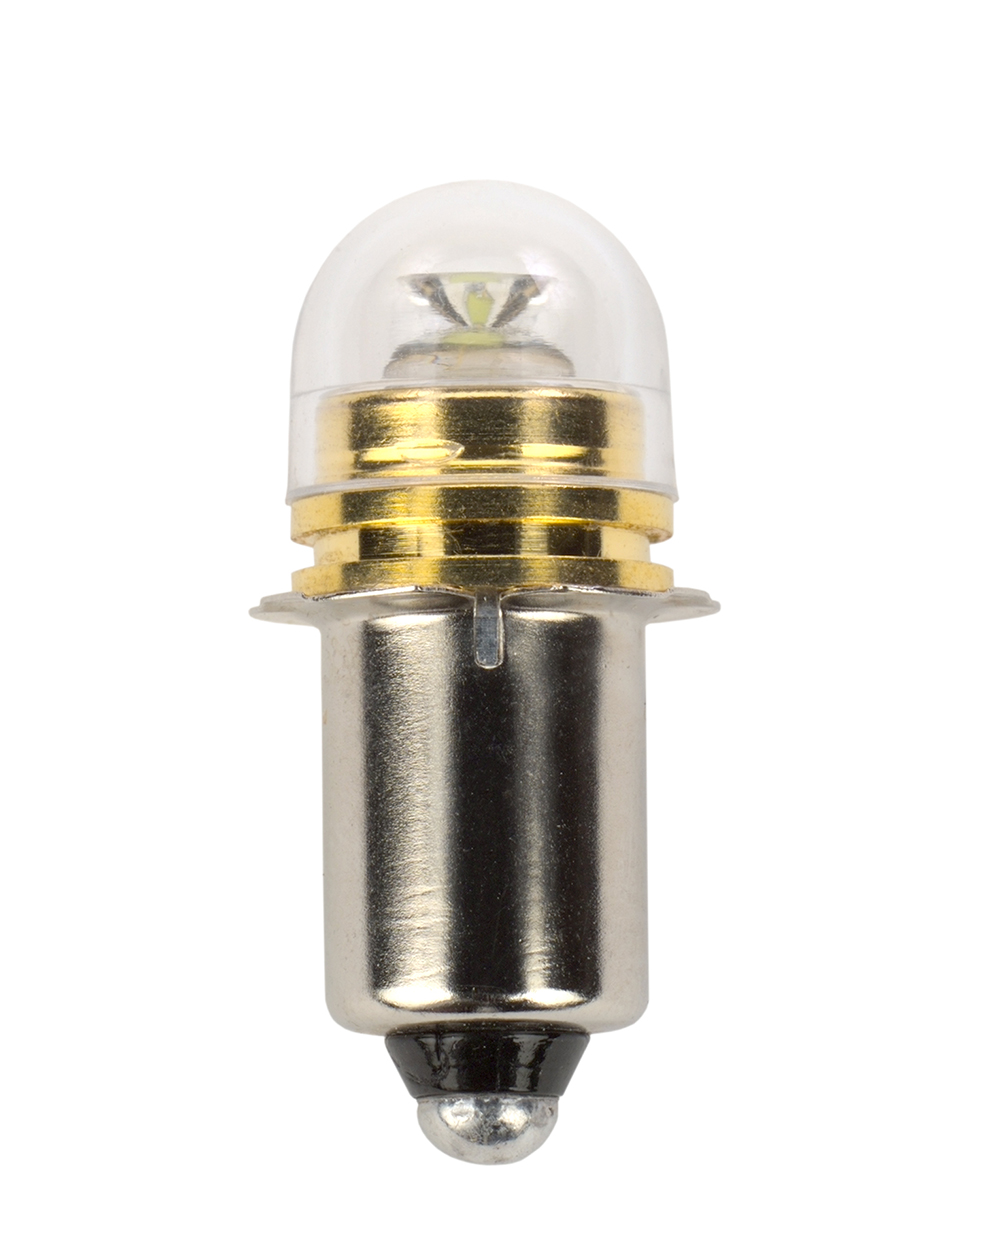 High-Power LED Conversion Bulb LPR-3